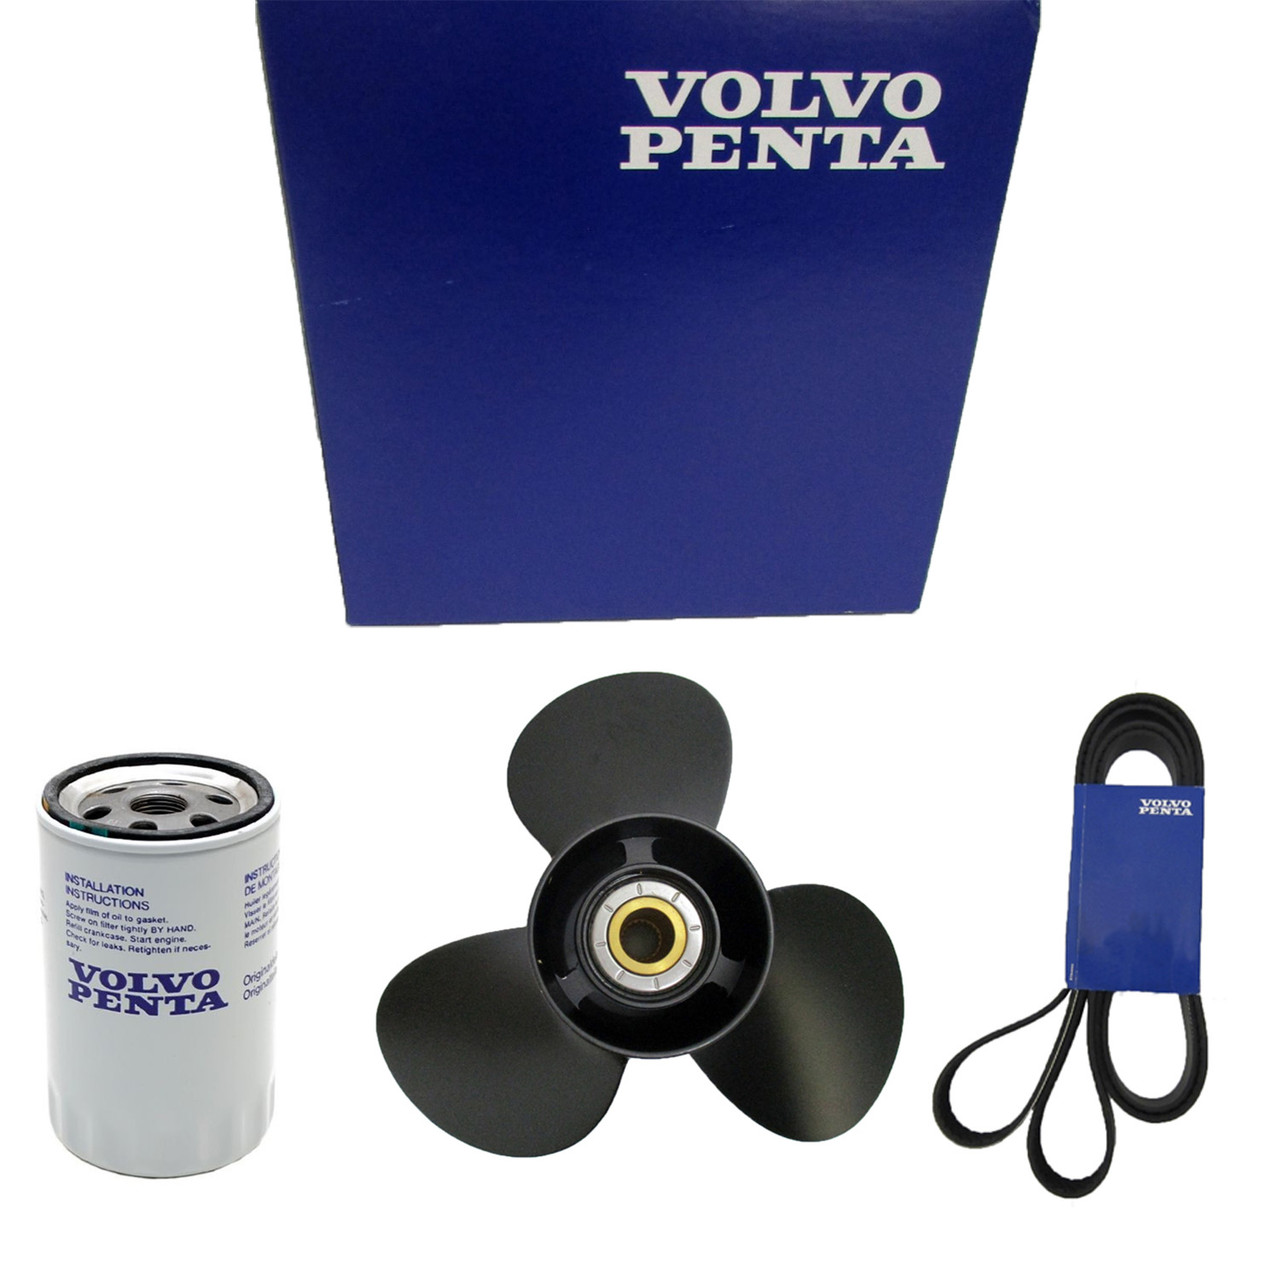 Volvo Penta New OEM Accessories Kit, 23037429